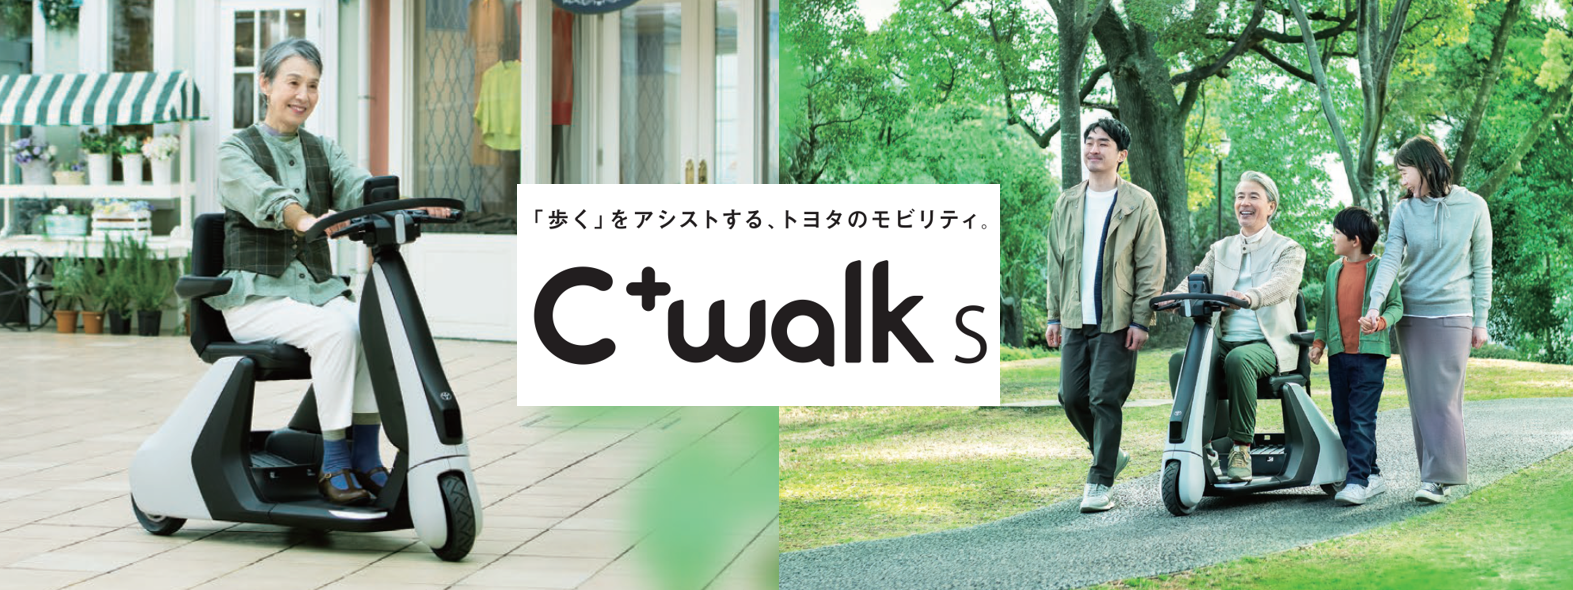 C+walks